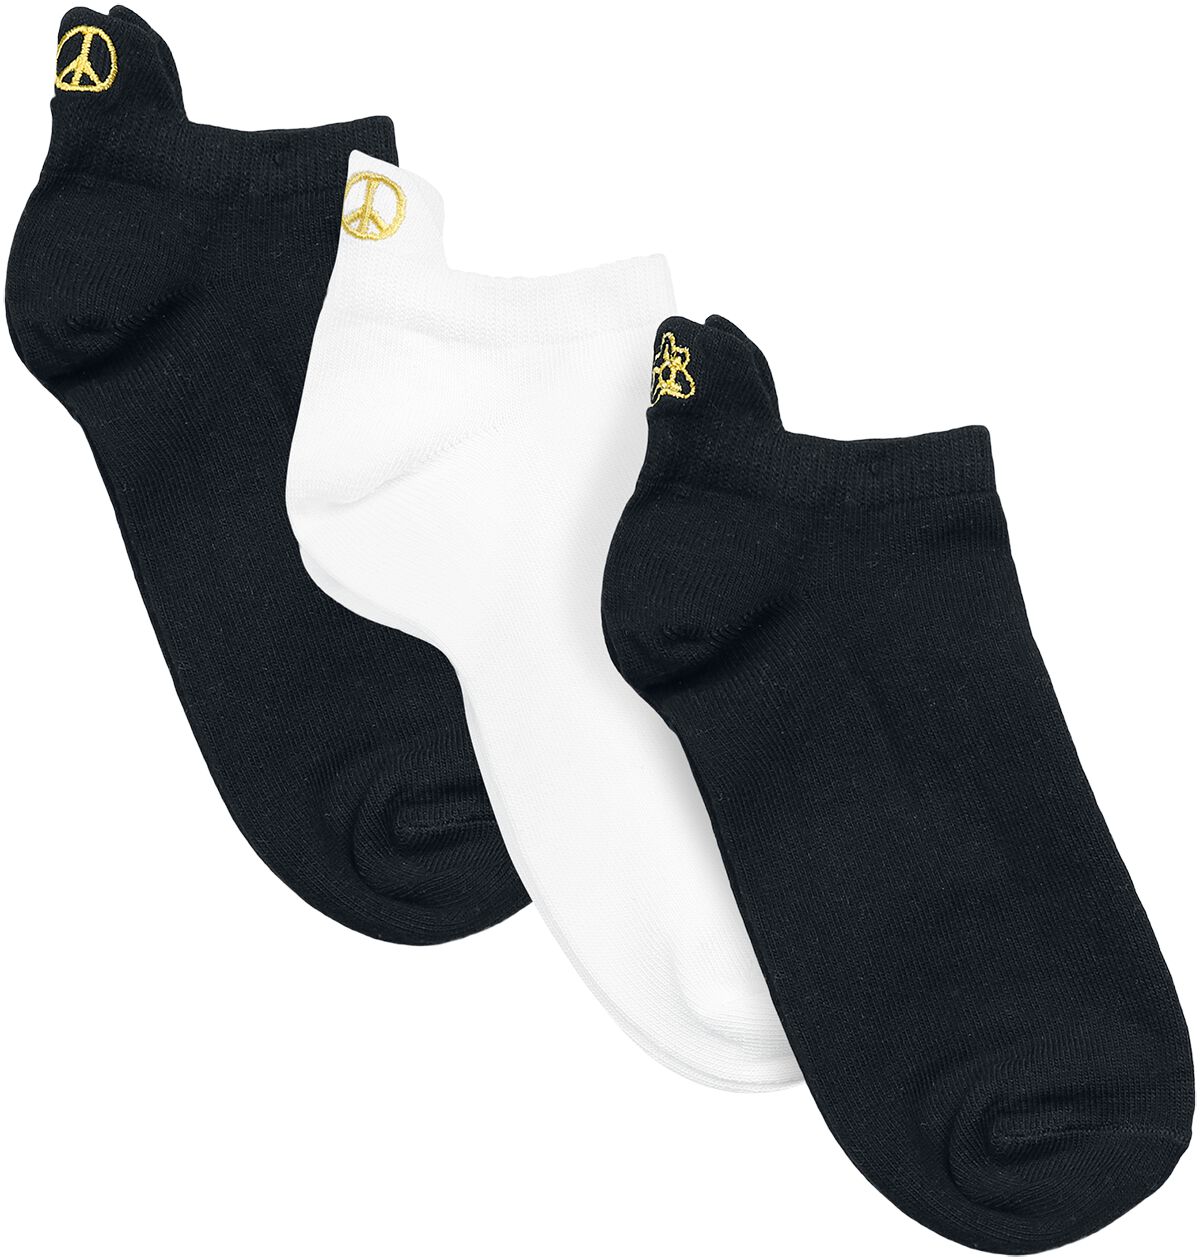 Urban Classics Peace Fancy Edge No Show Socks 3-Pack Socken schwarz weiß in EU 43-46